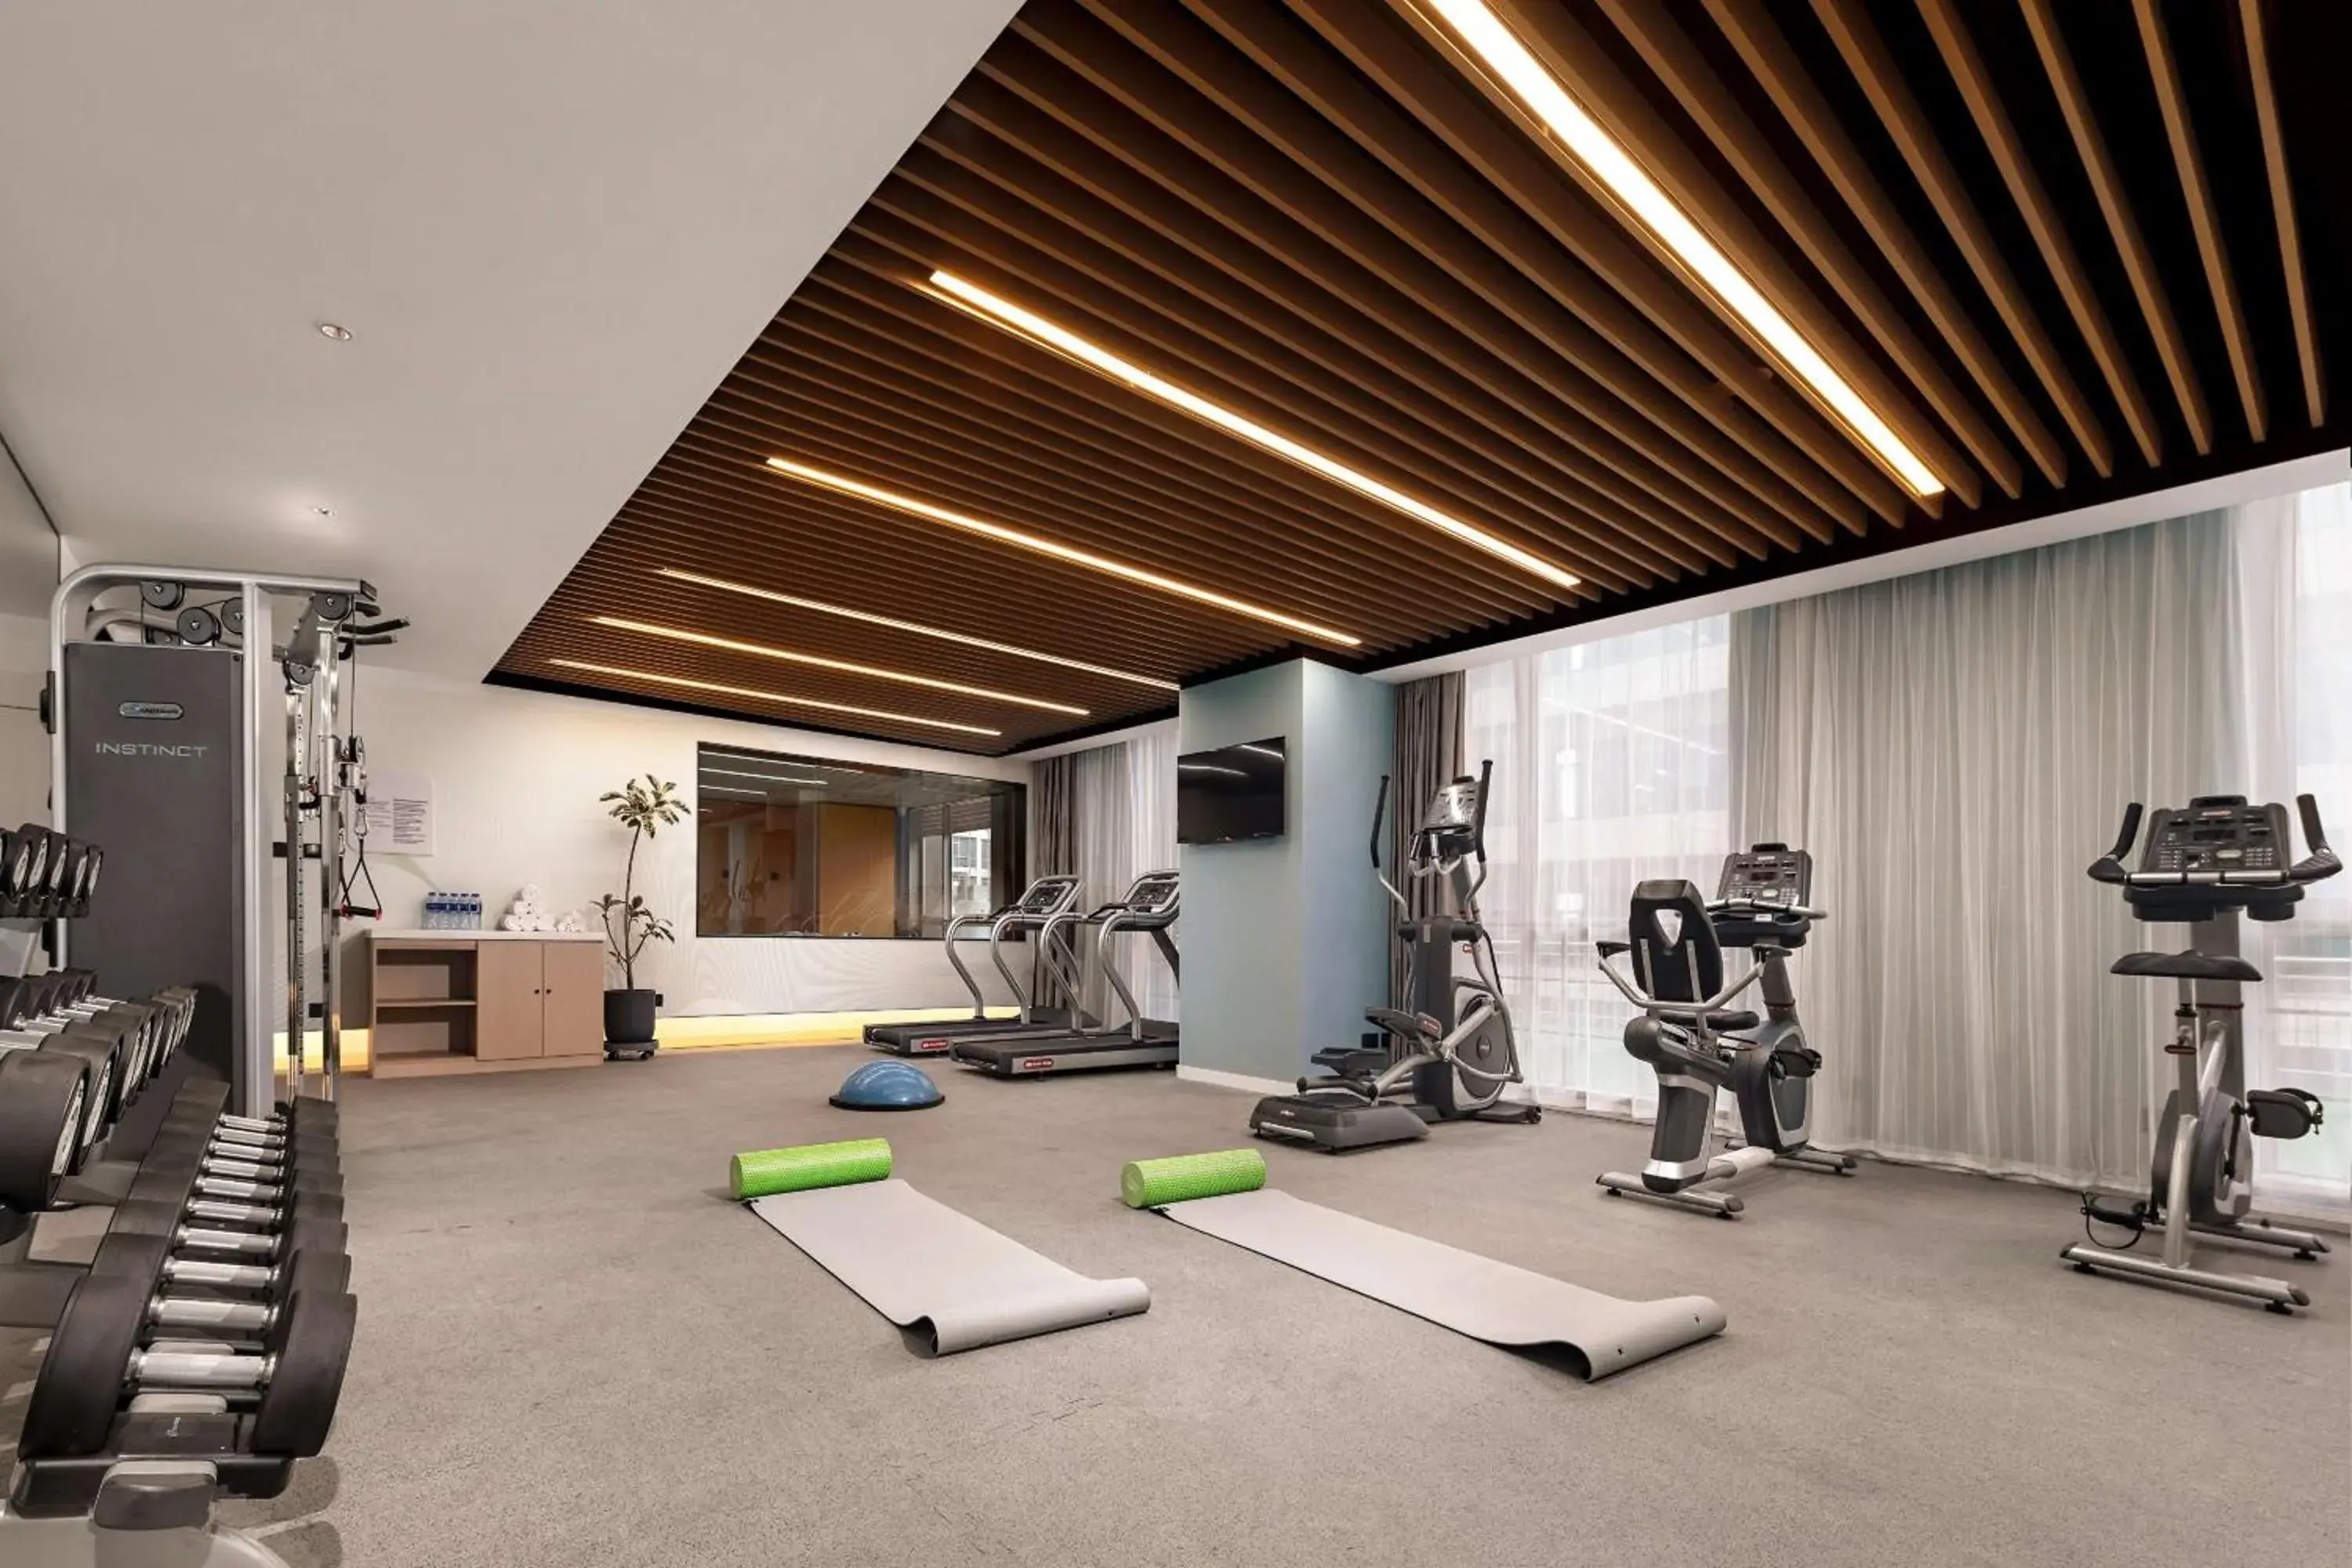 Fitness centre/facilities, Fitness Center/Facilities in Hilton Garden Inn Hefei Binhu New District